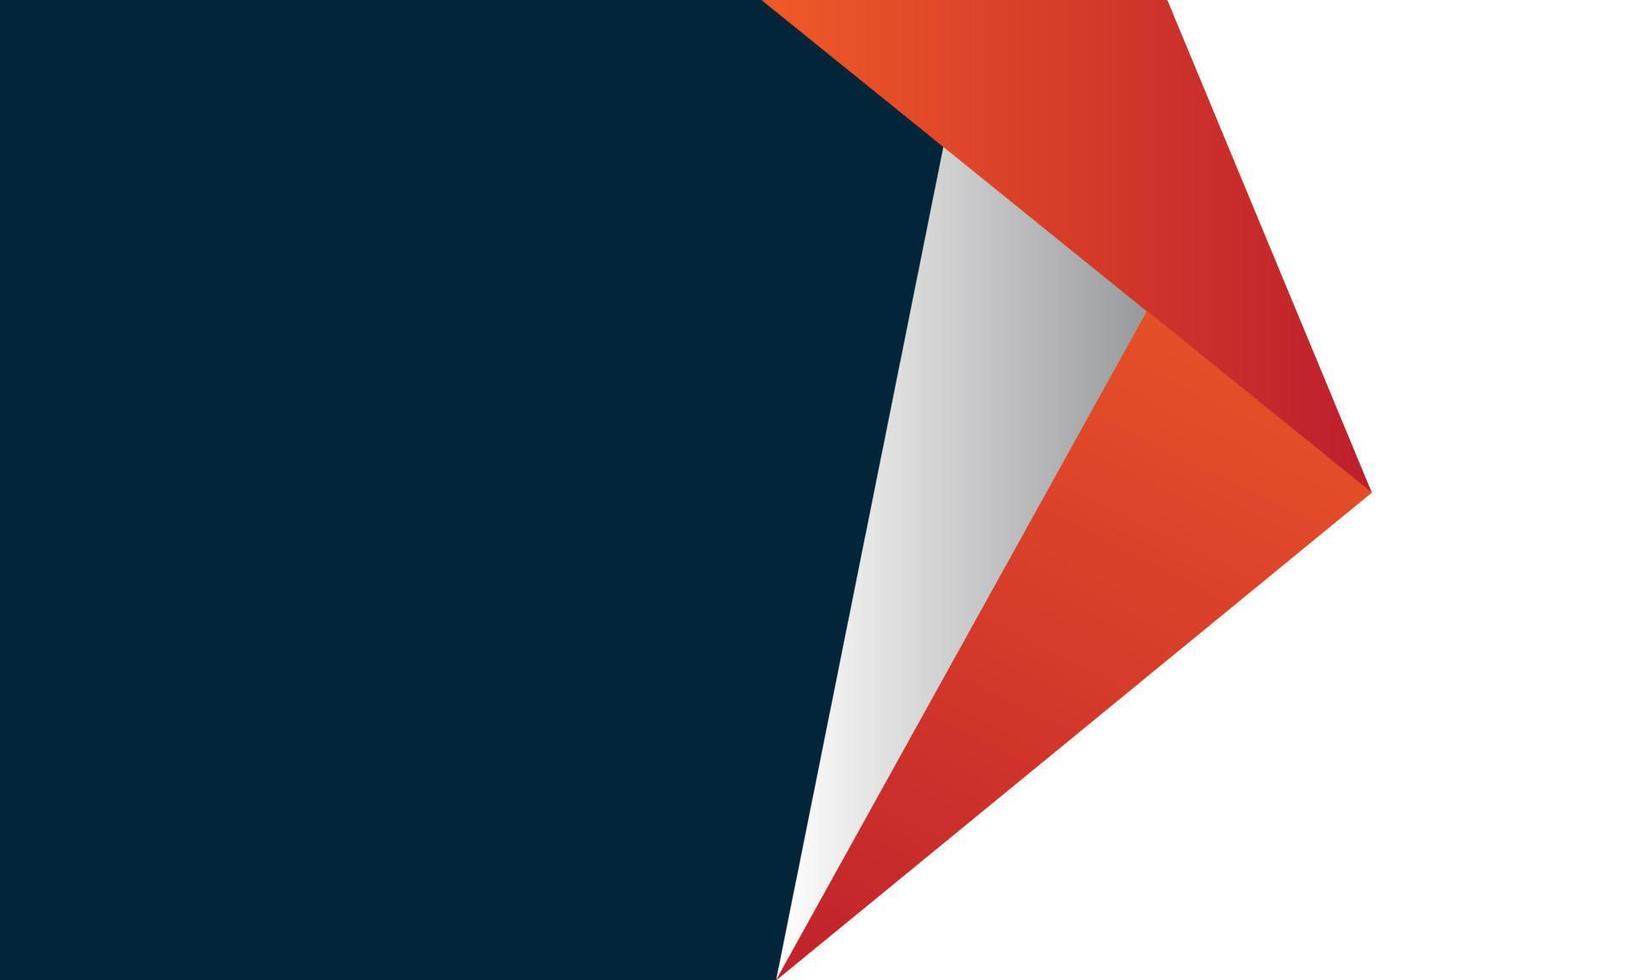 Modern abstract shape dark blue orange gradation background for business presentation vector